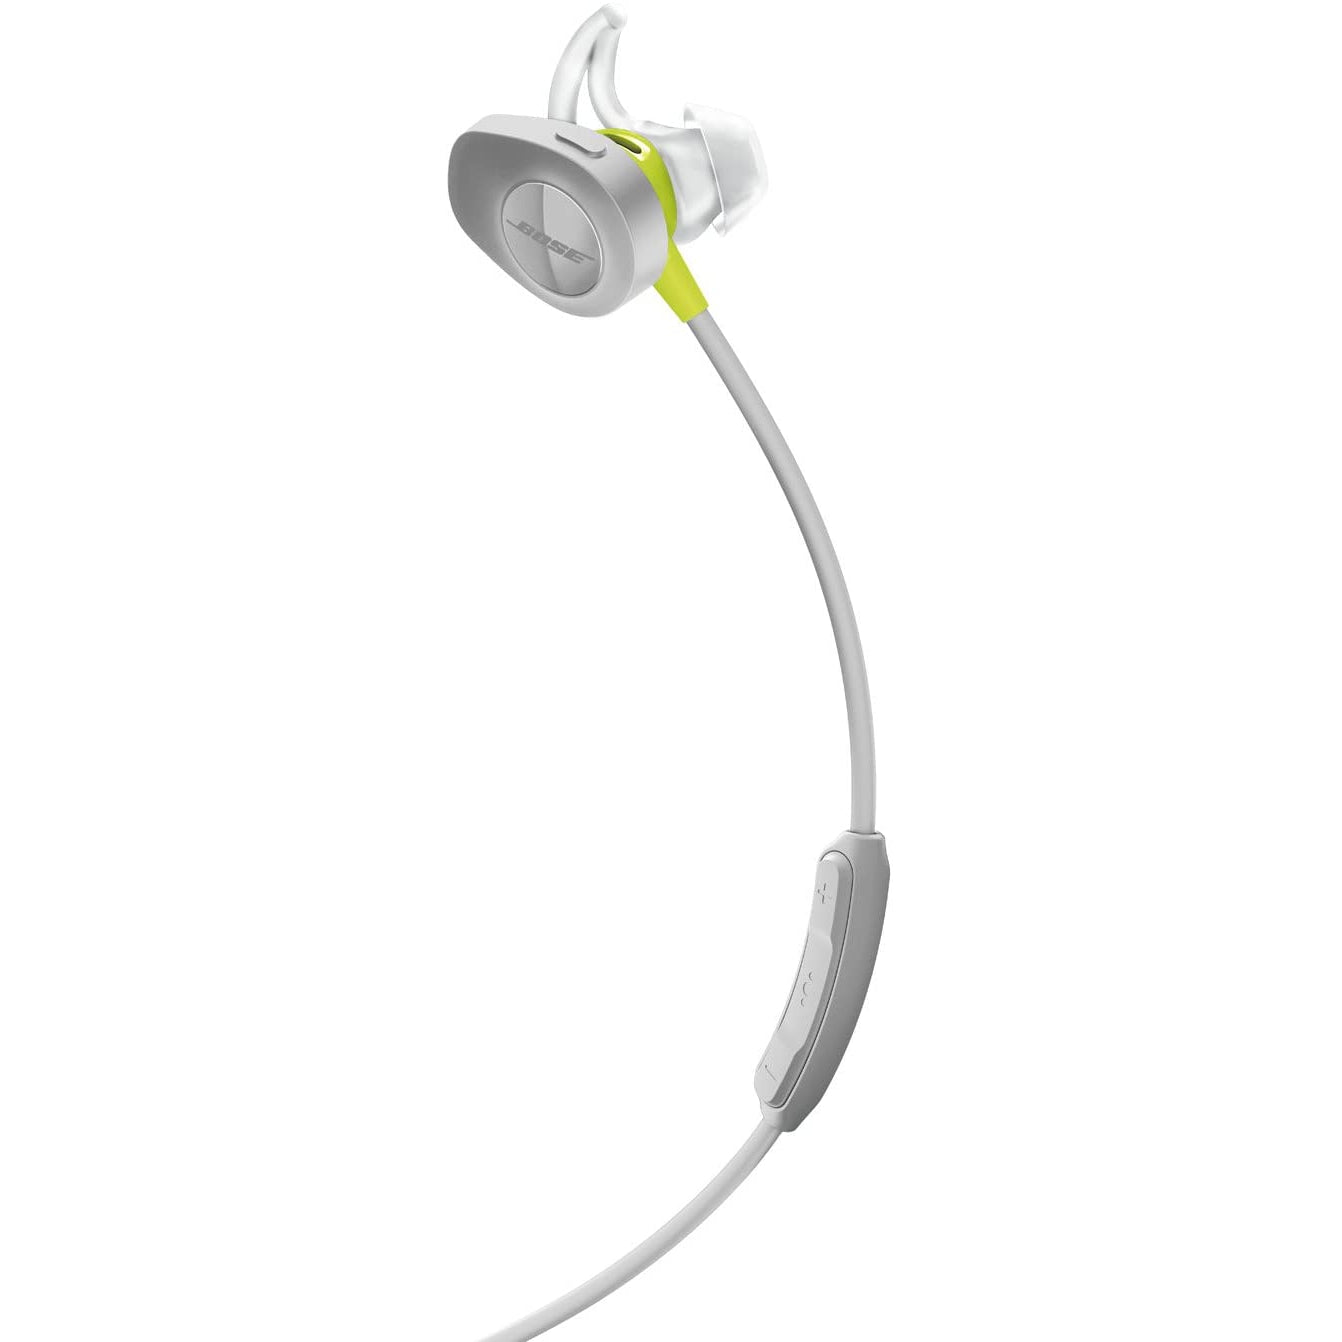 Bose AI1 SoundSport Wireless Earphones, Grey and Yellow